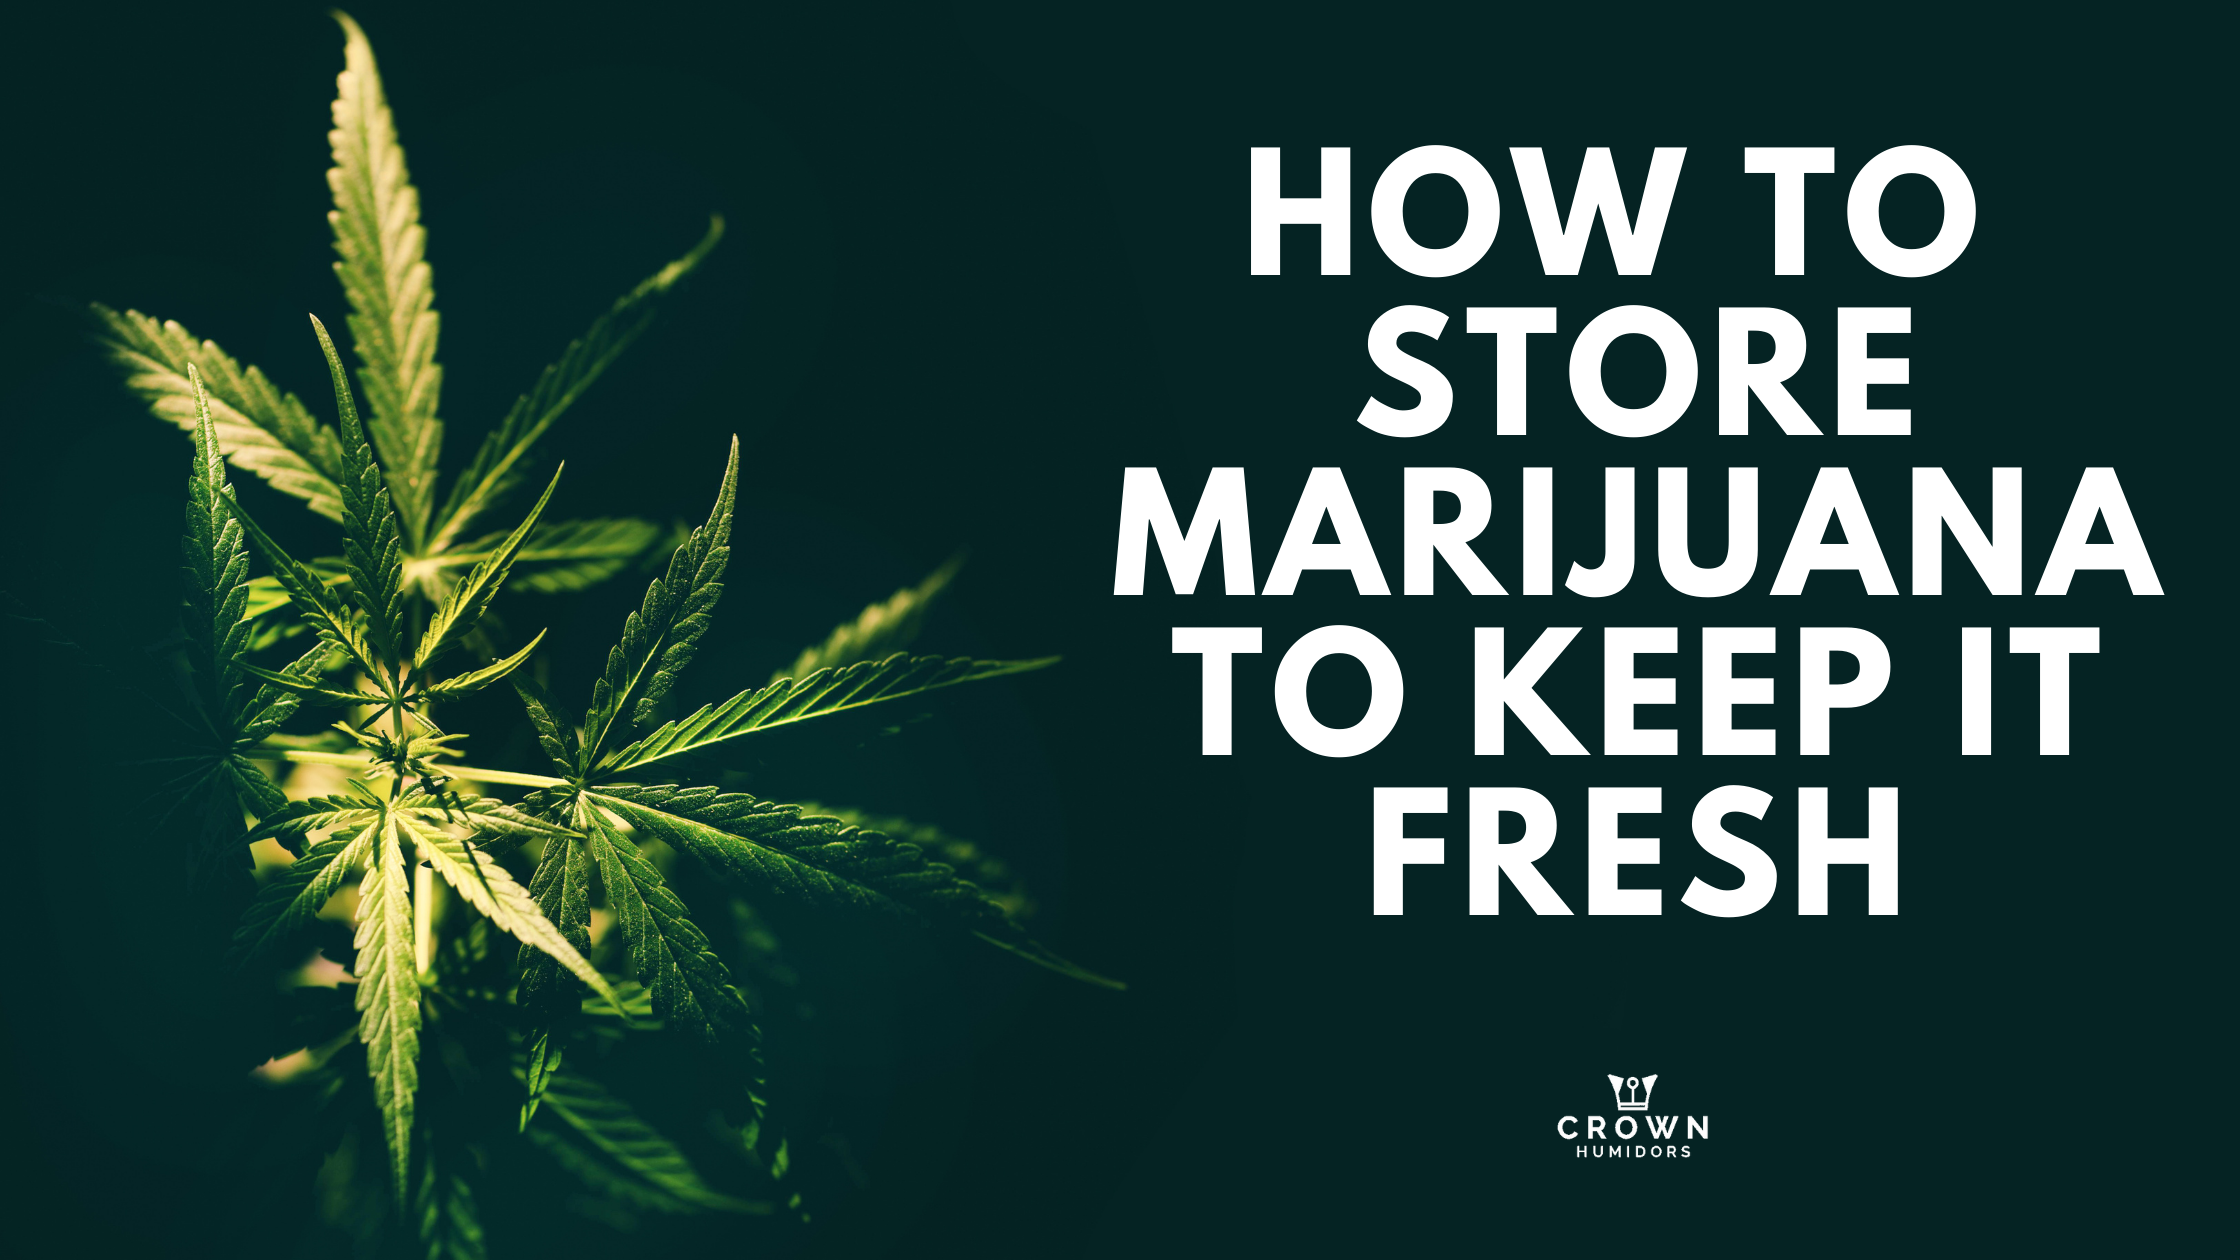 How to Store Marijuana to keep it fresh